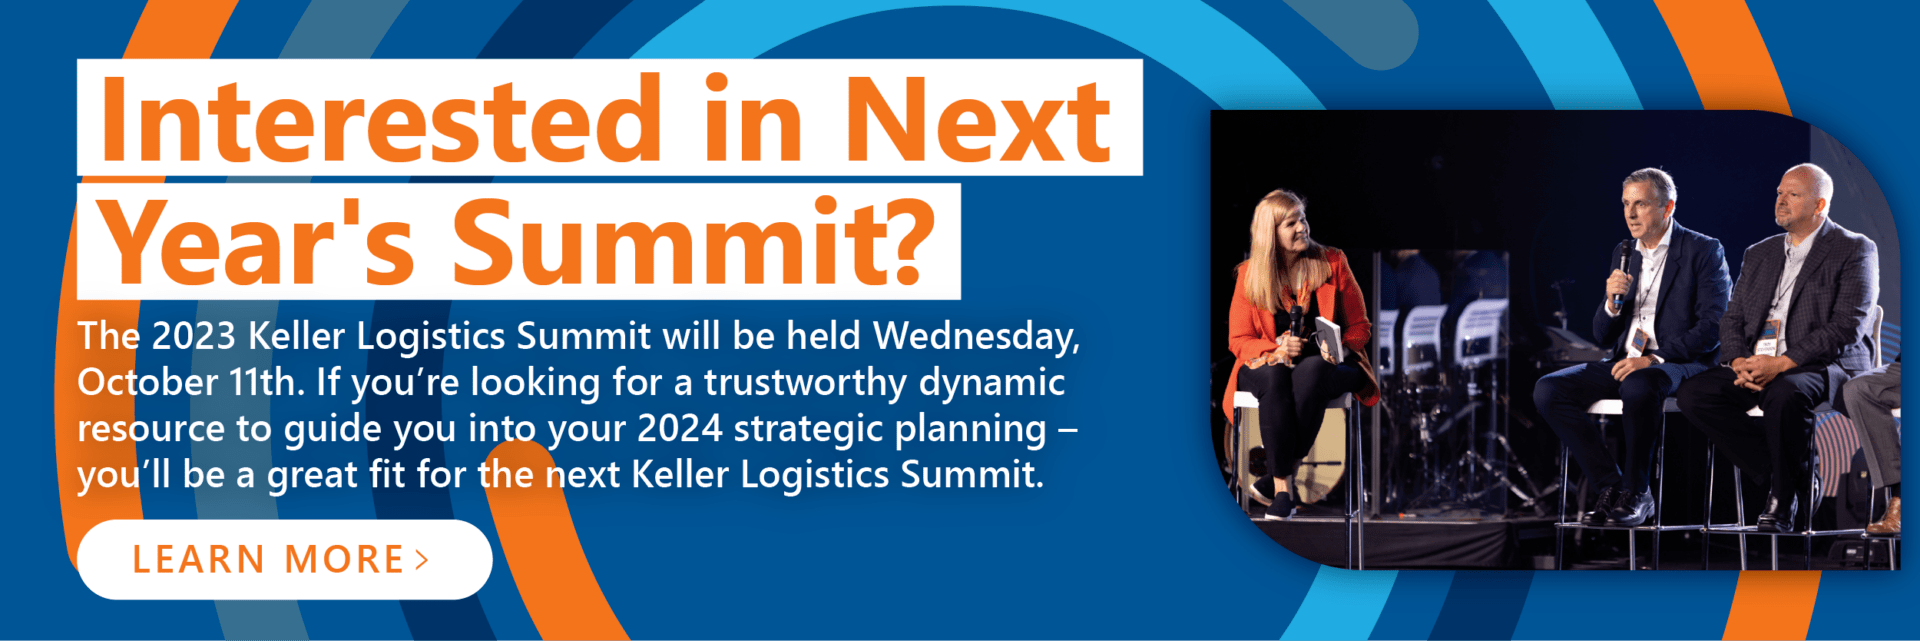 2023 Keller Logistics Summit 